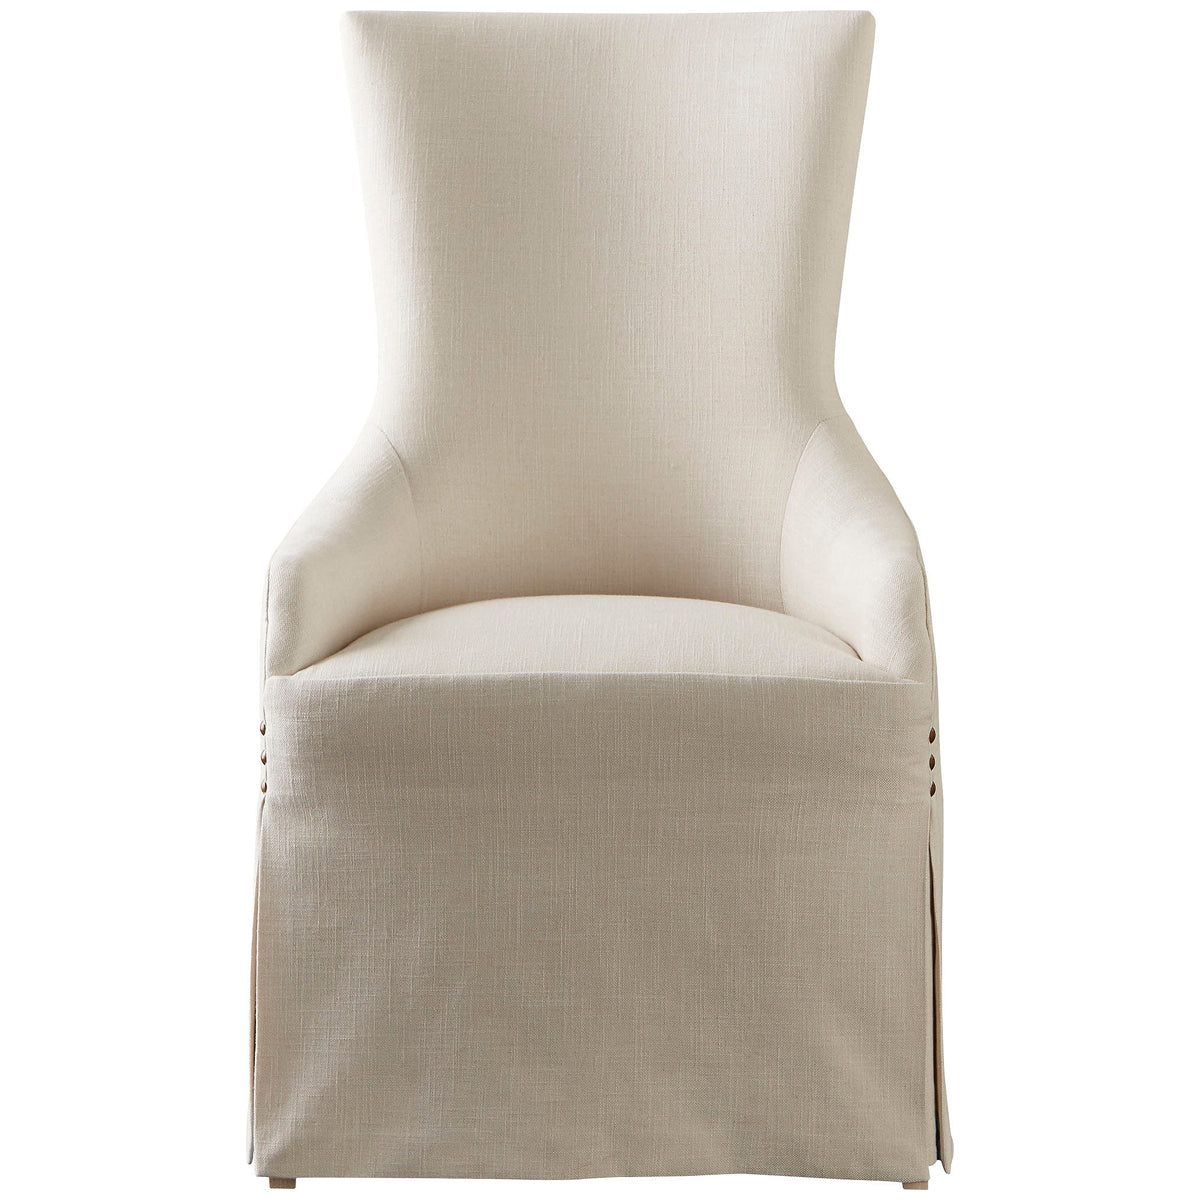 Baker Furniture Delphine Arm Chair BA6282